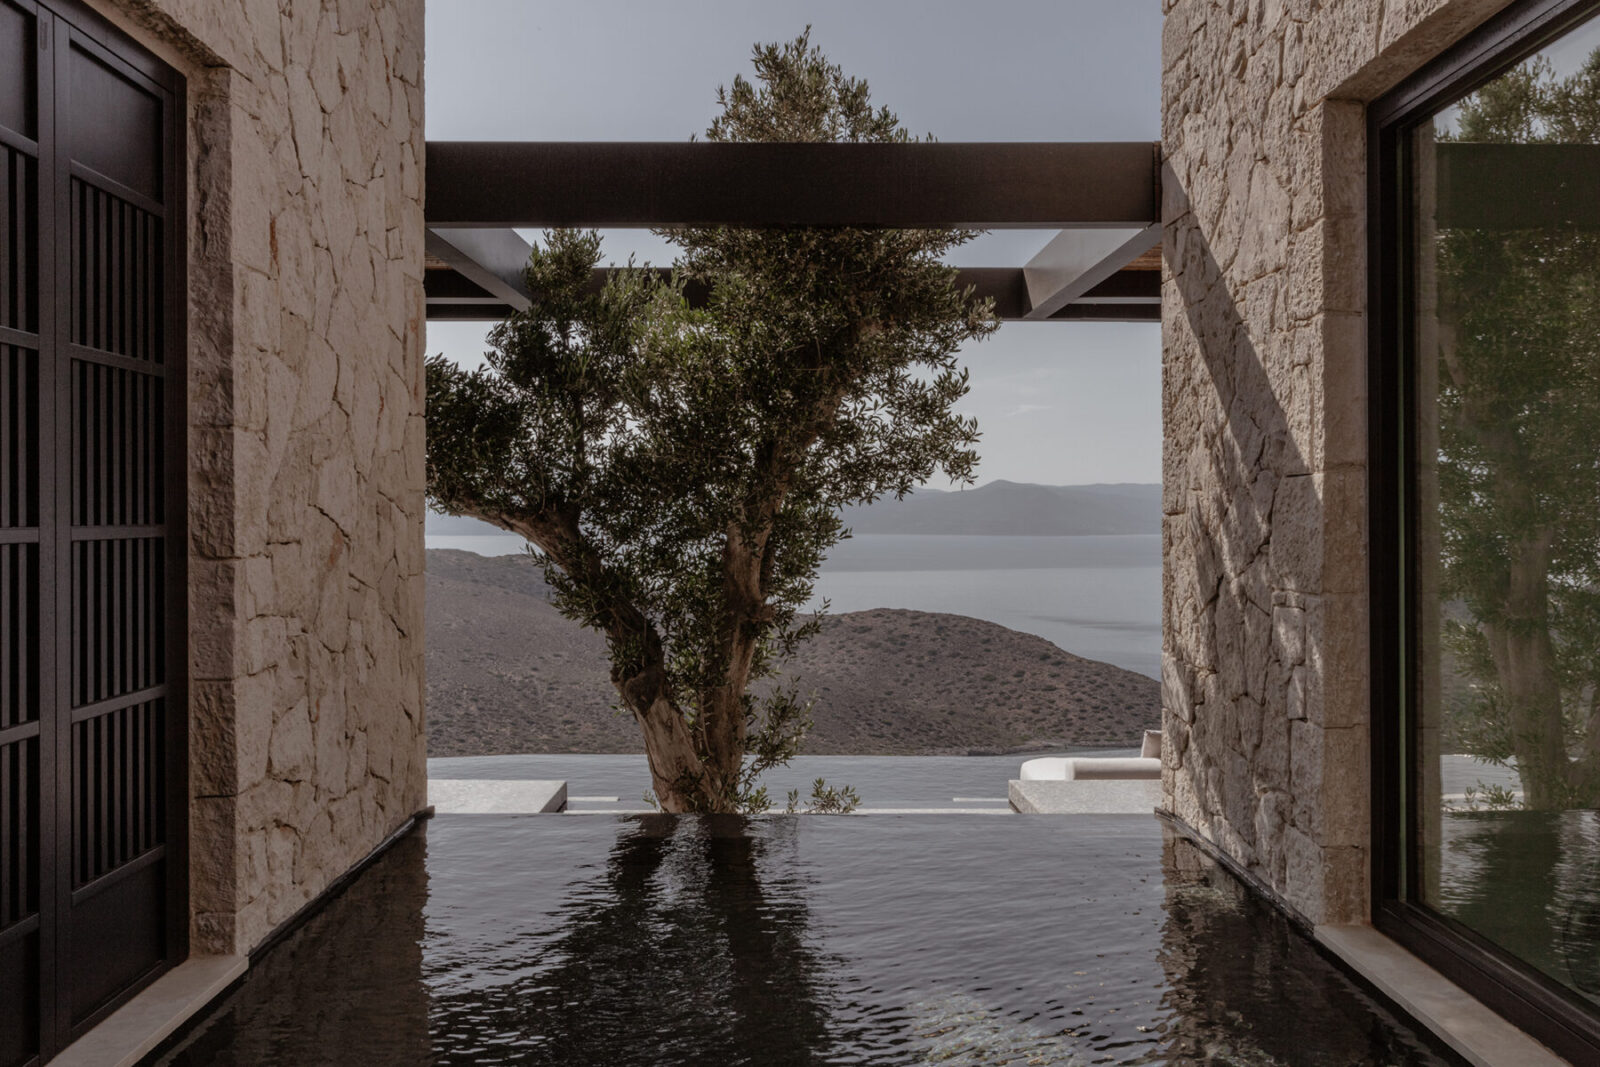 Archisearch 'Ο Λόφος': οι Block722 Architects σχεδίασαν μια εντυπωσιακή κατοικία στους πρόποδες του βουνού Θρυπτή στην ανατολική Κρήτη